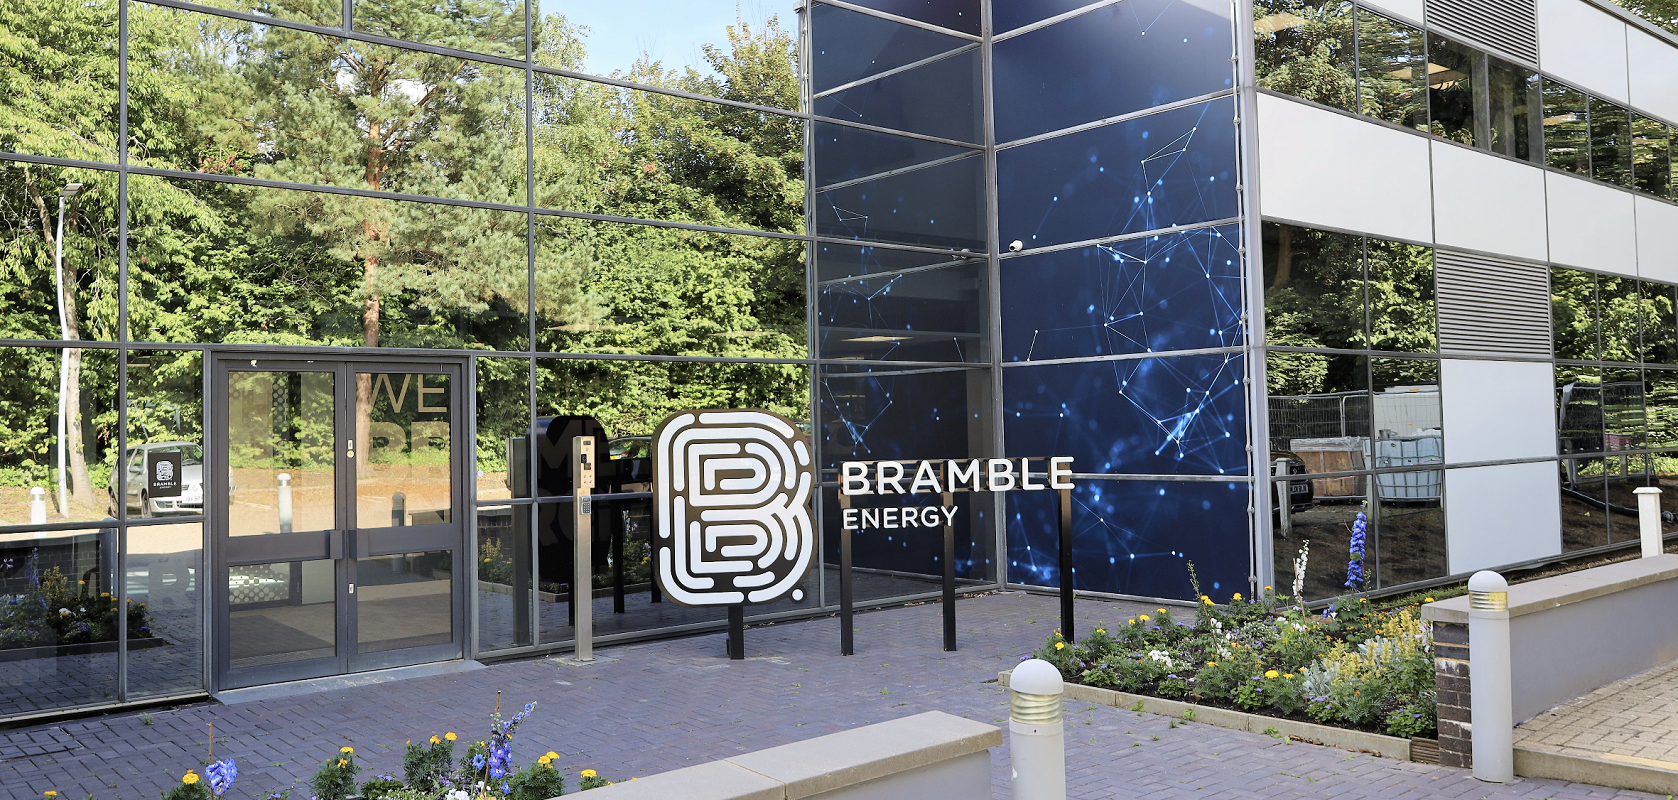 Hydrogen Boat - Fuel cell technology - Bramble Energy -Atrium Court - Source- Bramble Energy